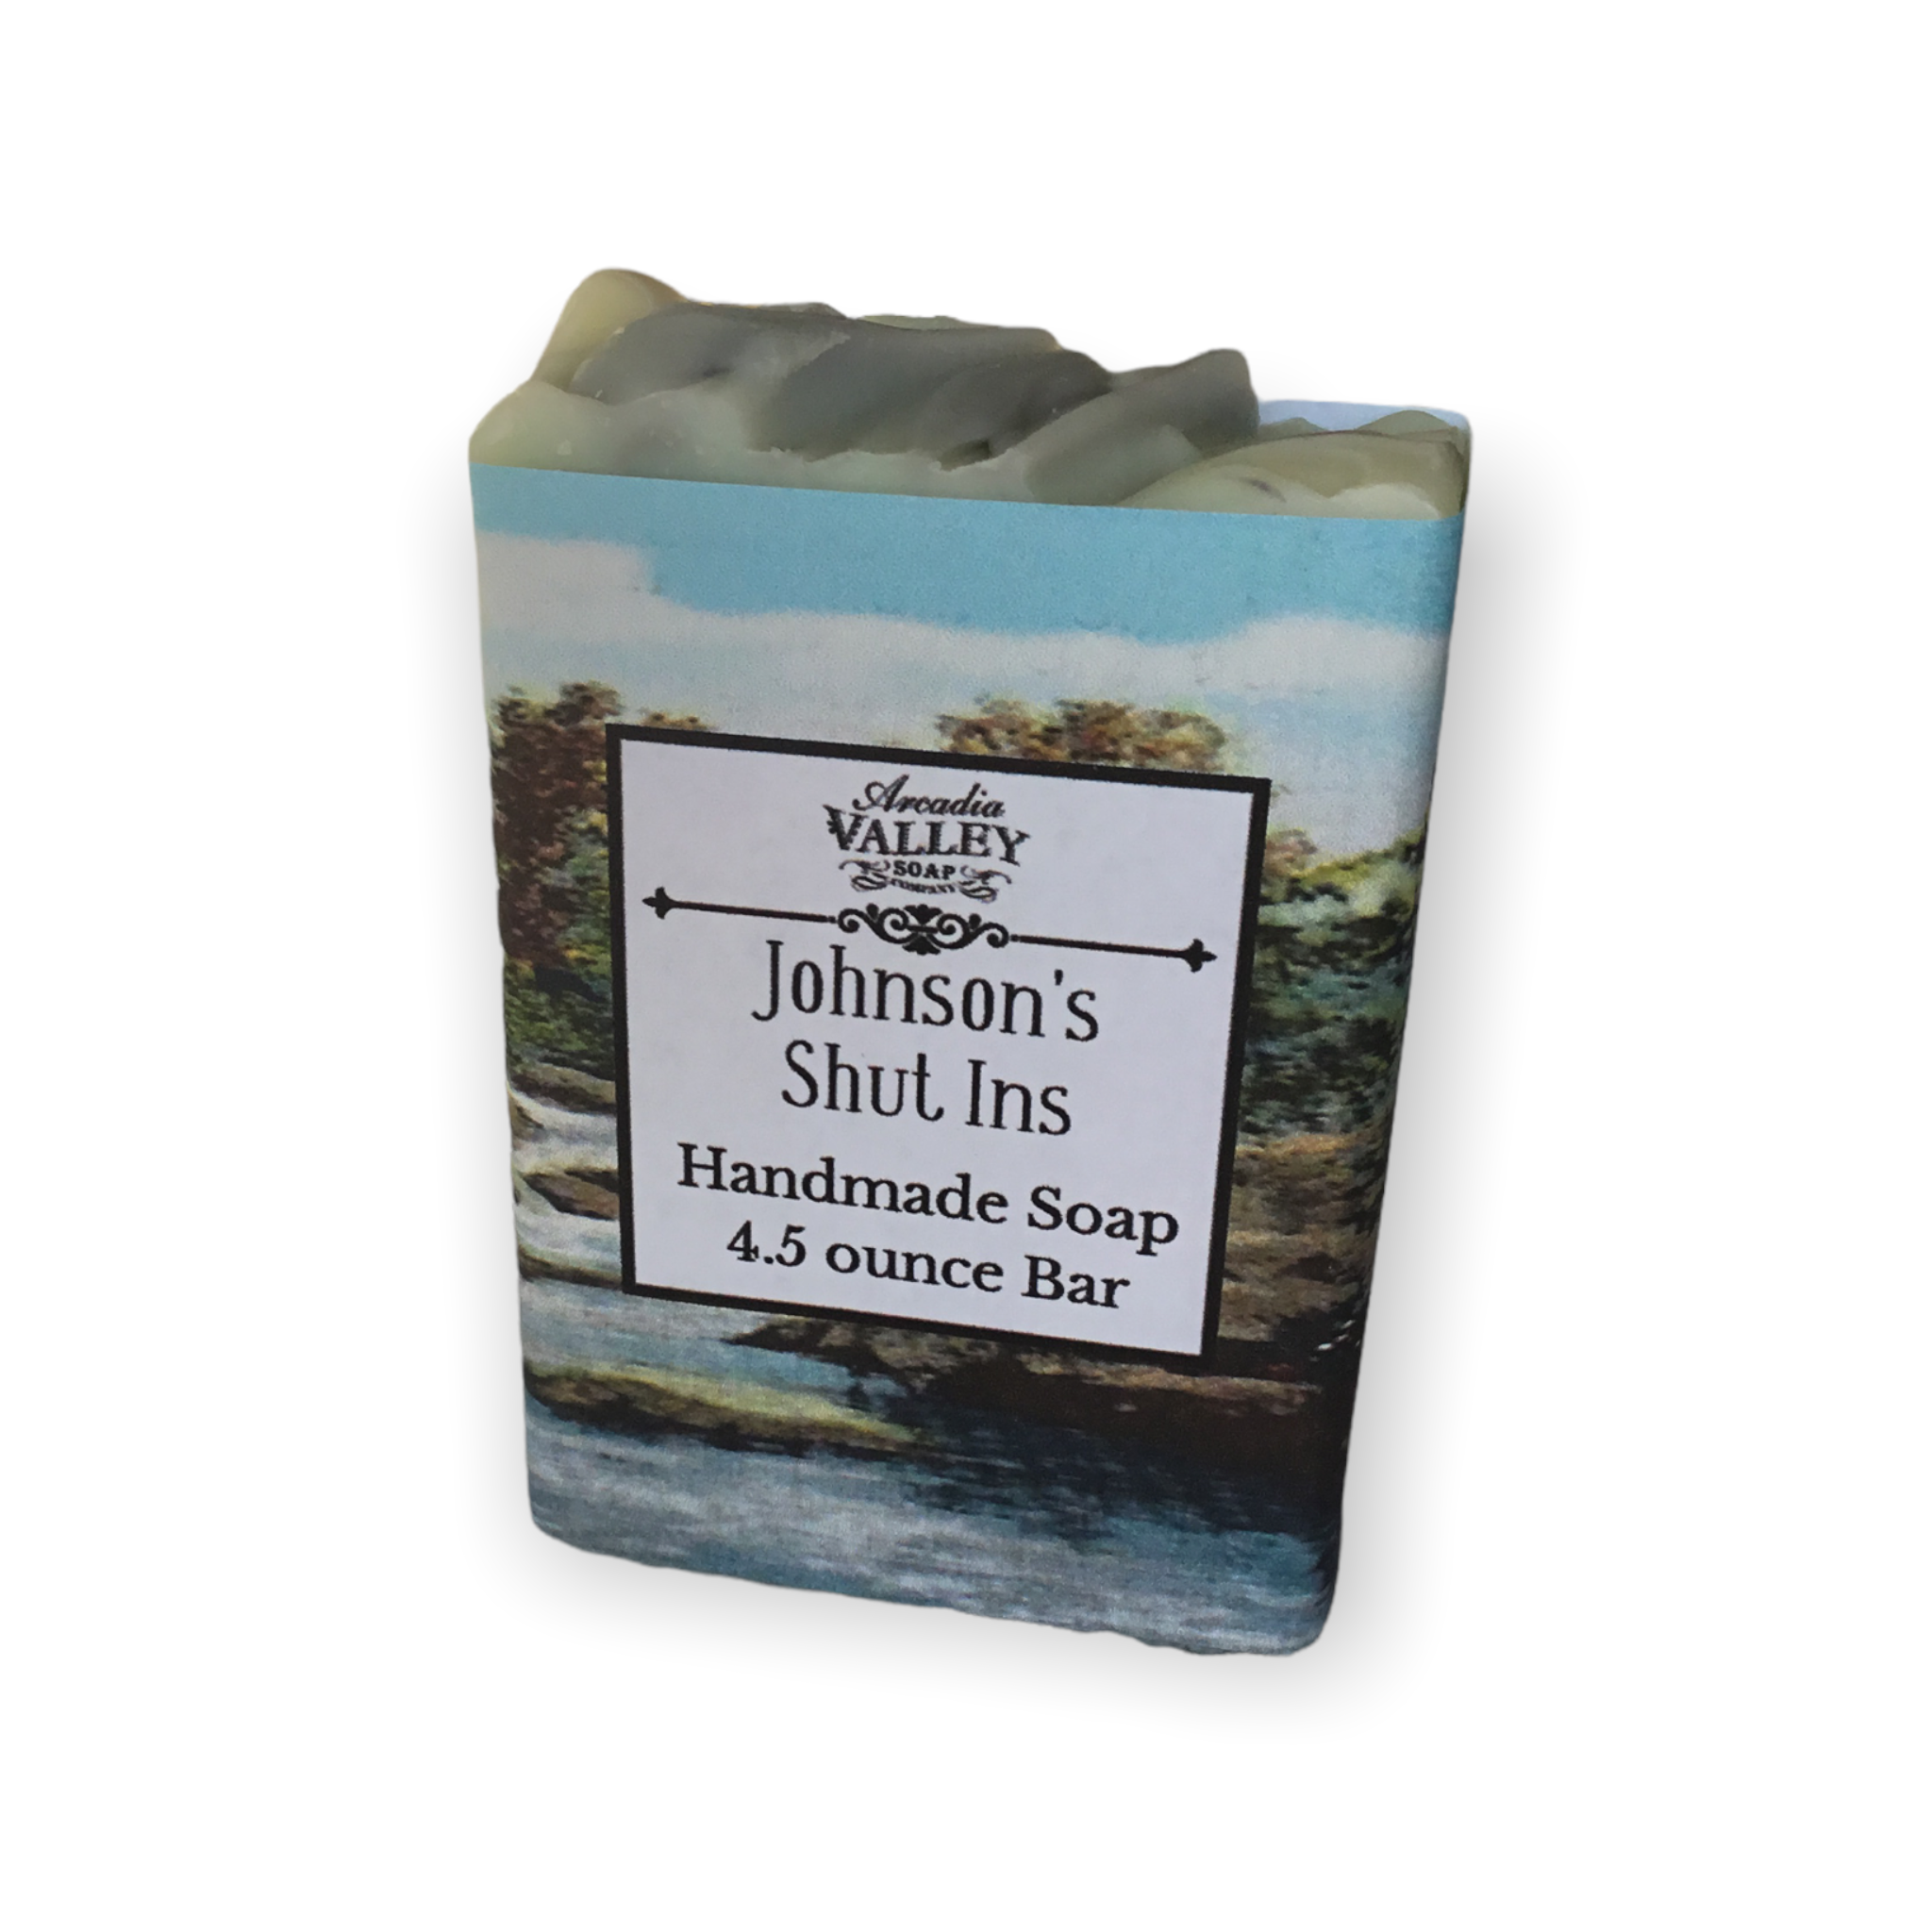 Johnson's Shut-Ins Handmade Soap